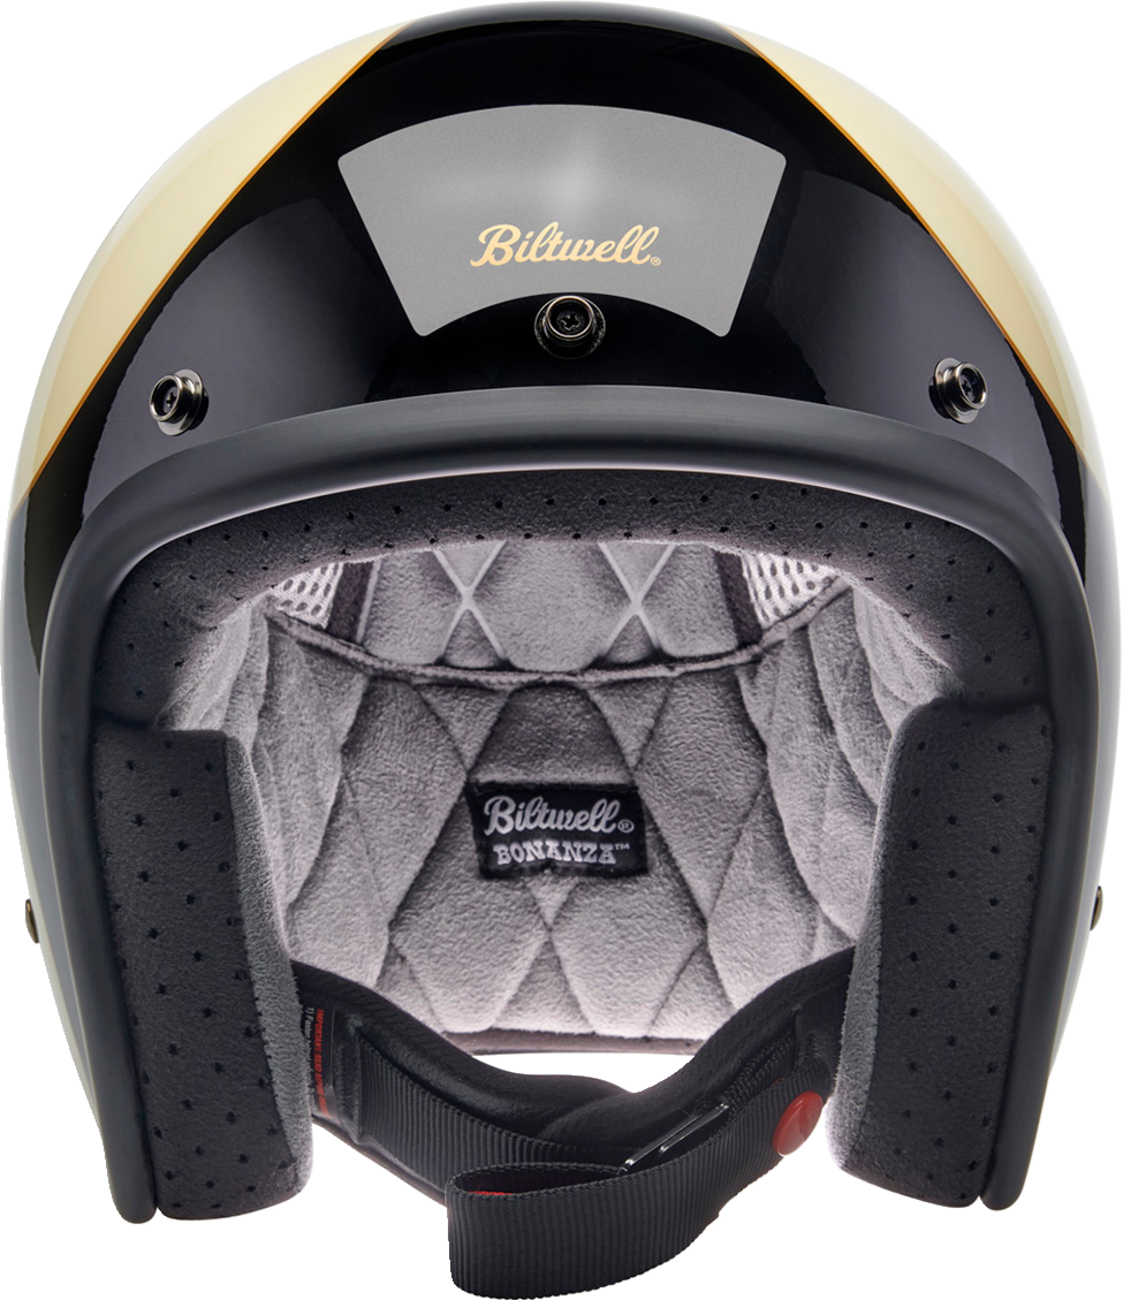 BILTWELL Bonanza Helmet - Gloss Vintage White/Black Scallop - Medium 1001-559-203